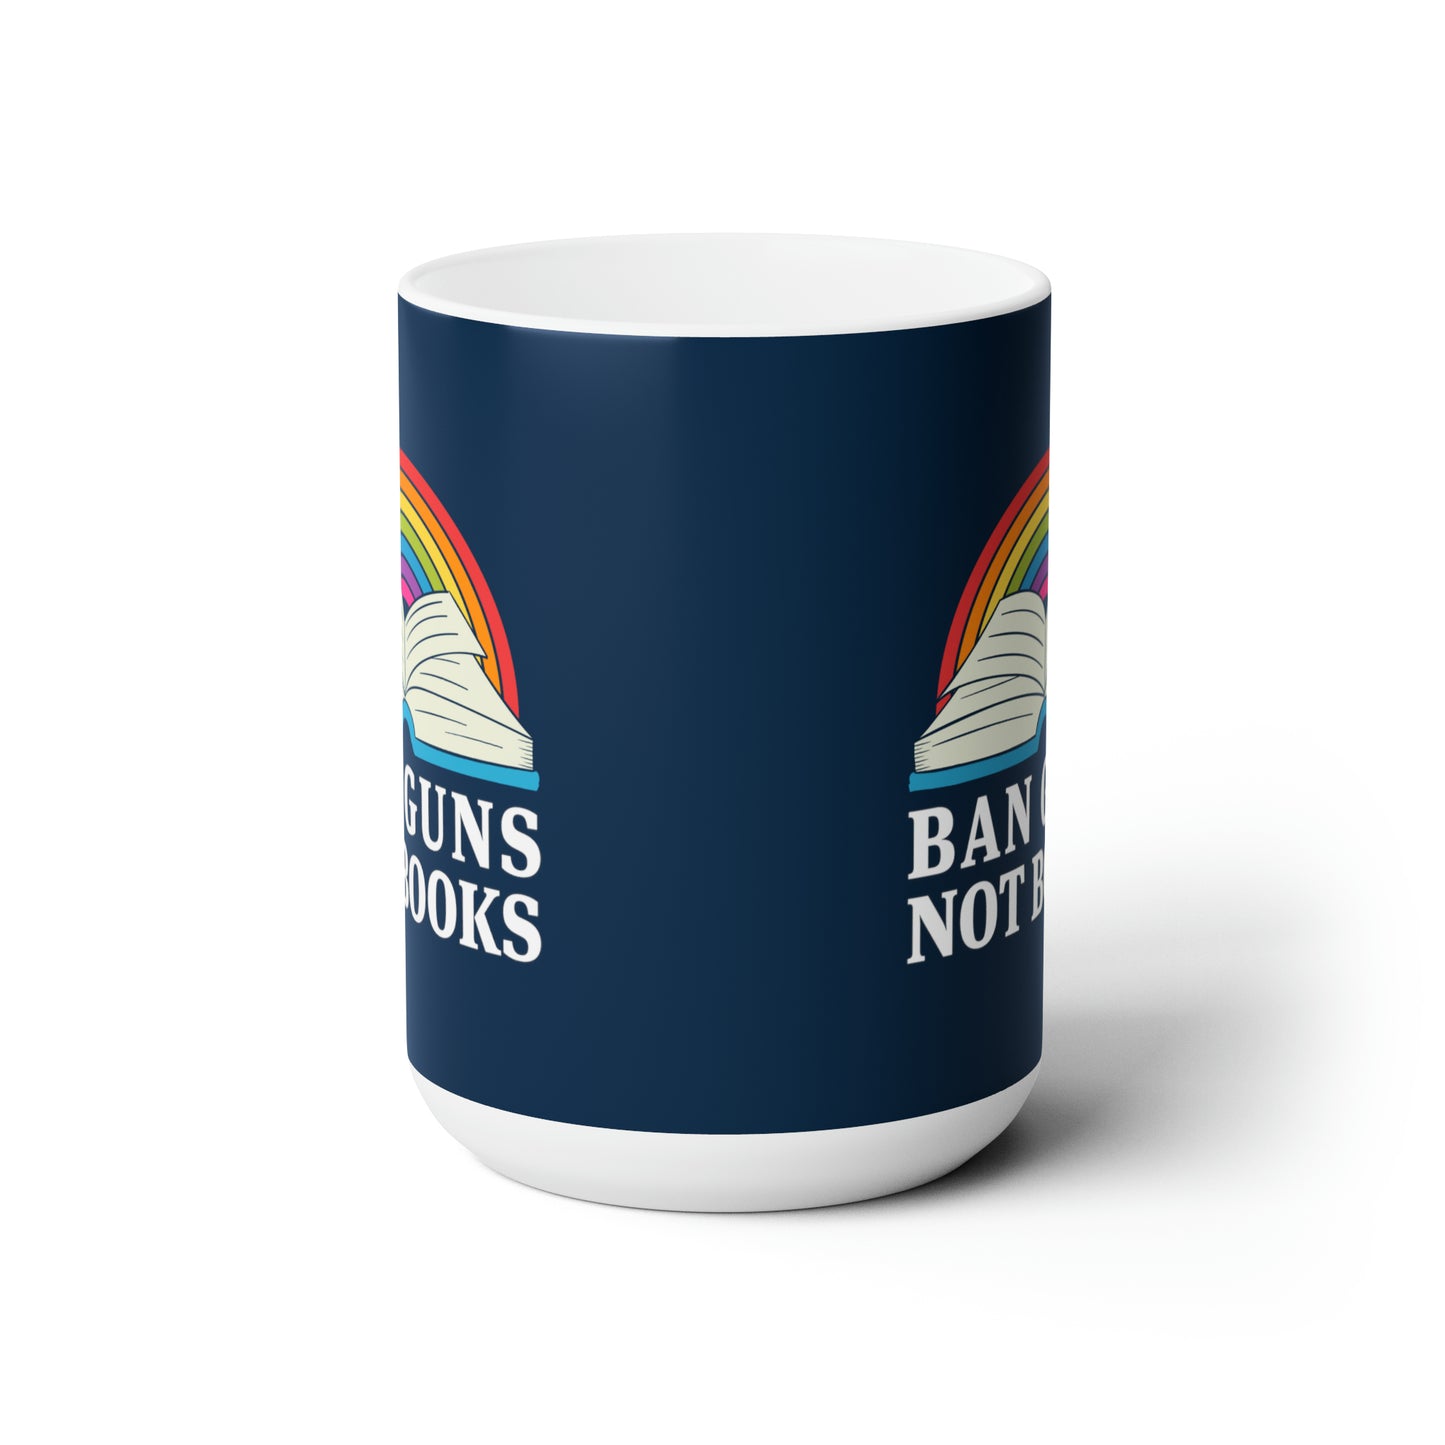 "Ban Guns Not Books" 15 oz. Mug